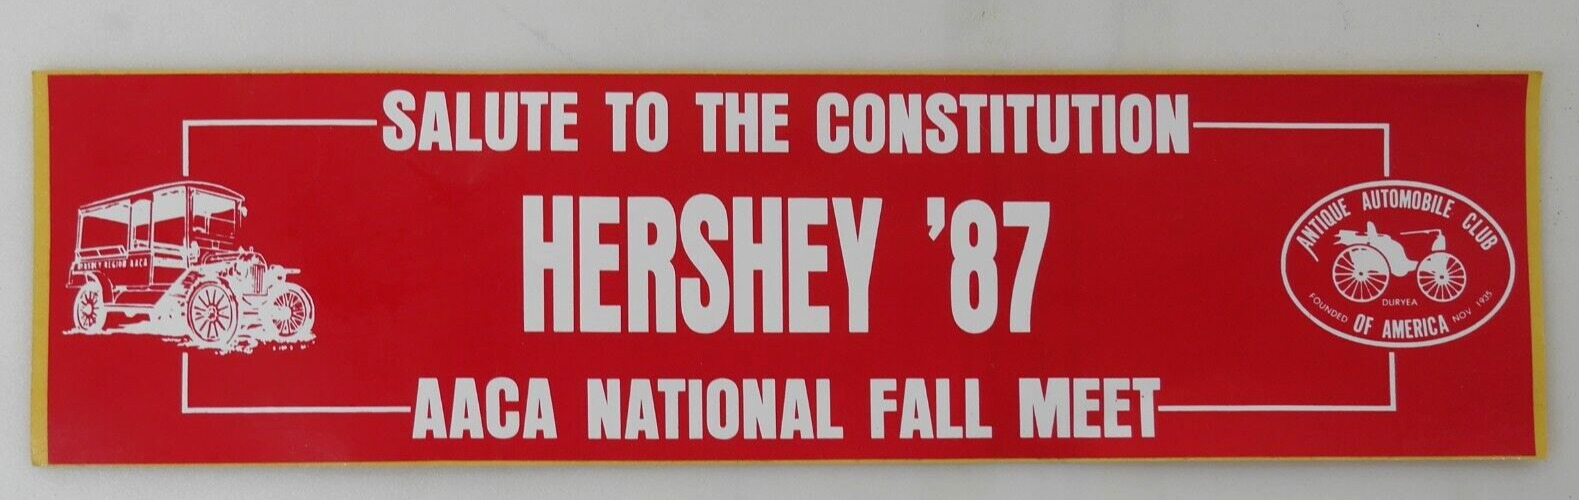 1987 Antique Automobile Club of America Hershey '87 Sticker National Fall Meet